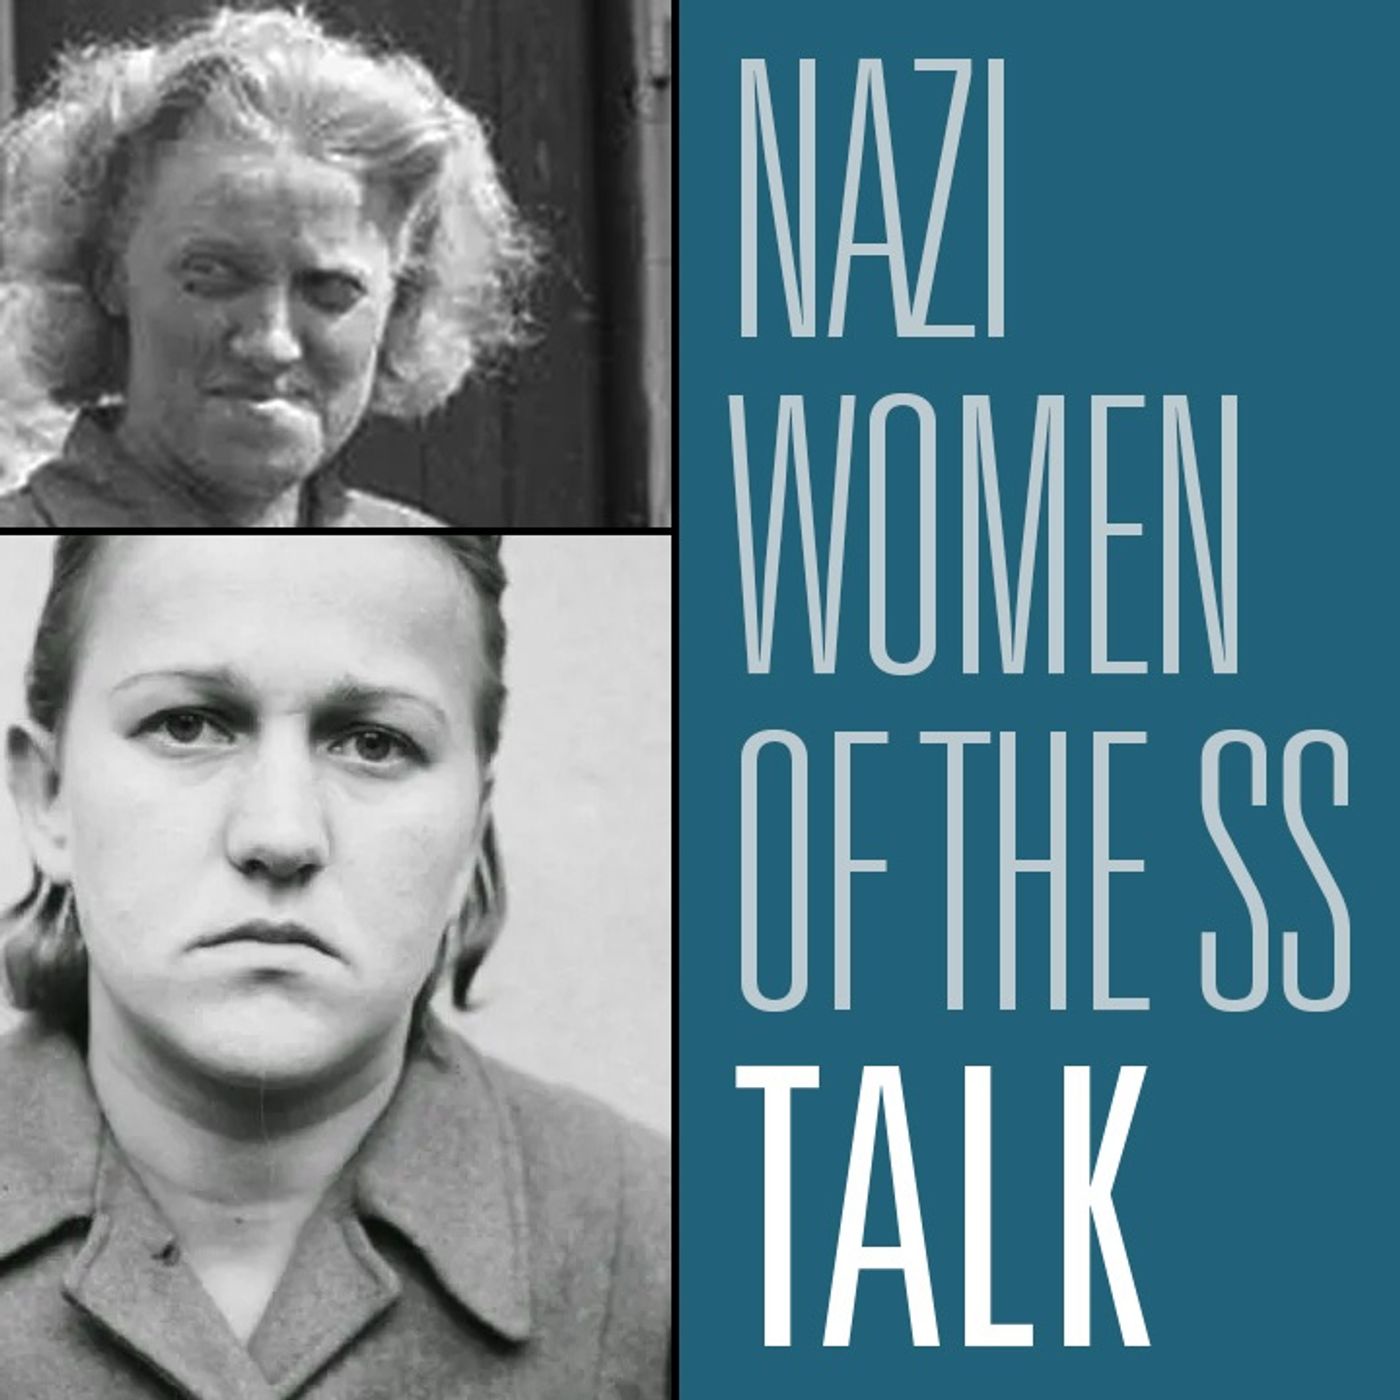 The Nazi Women of the SS | HBR Talk 232